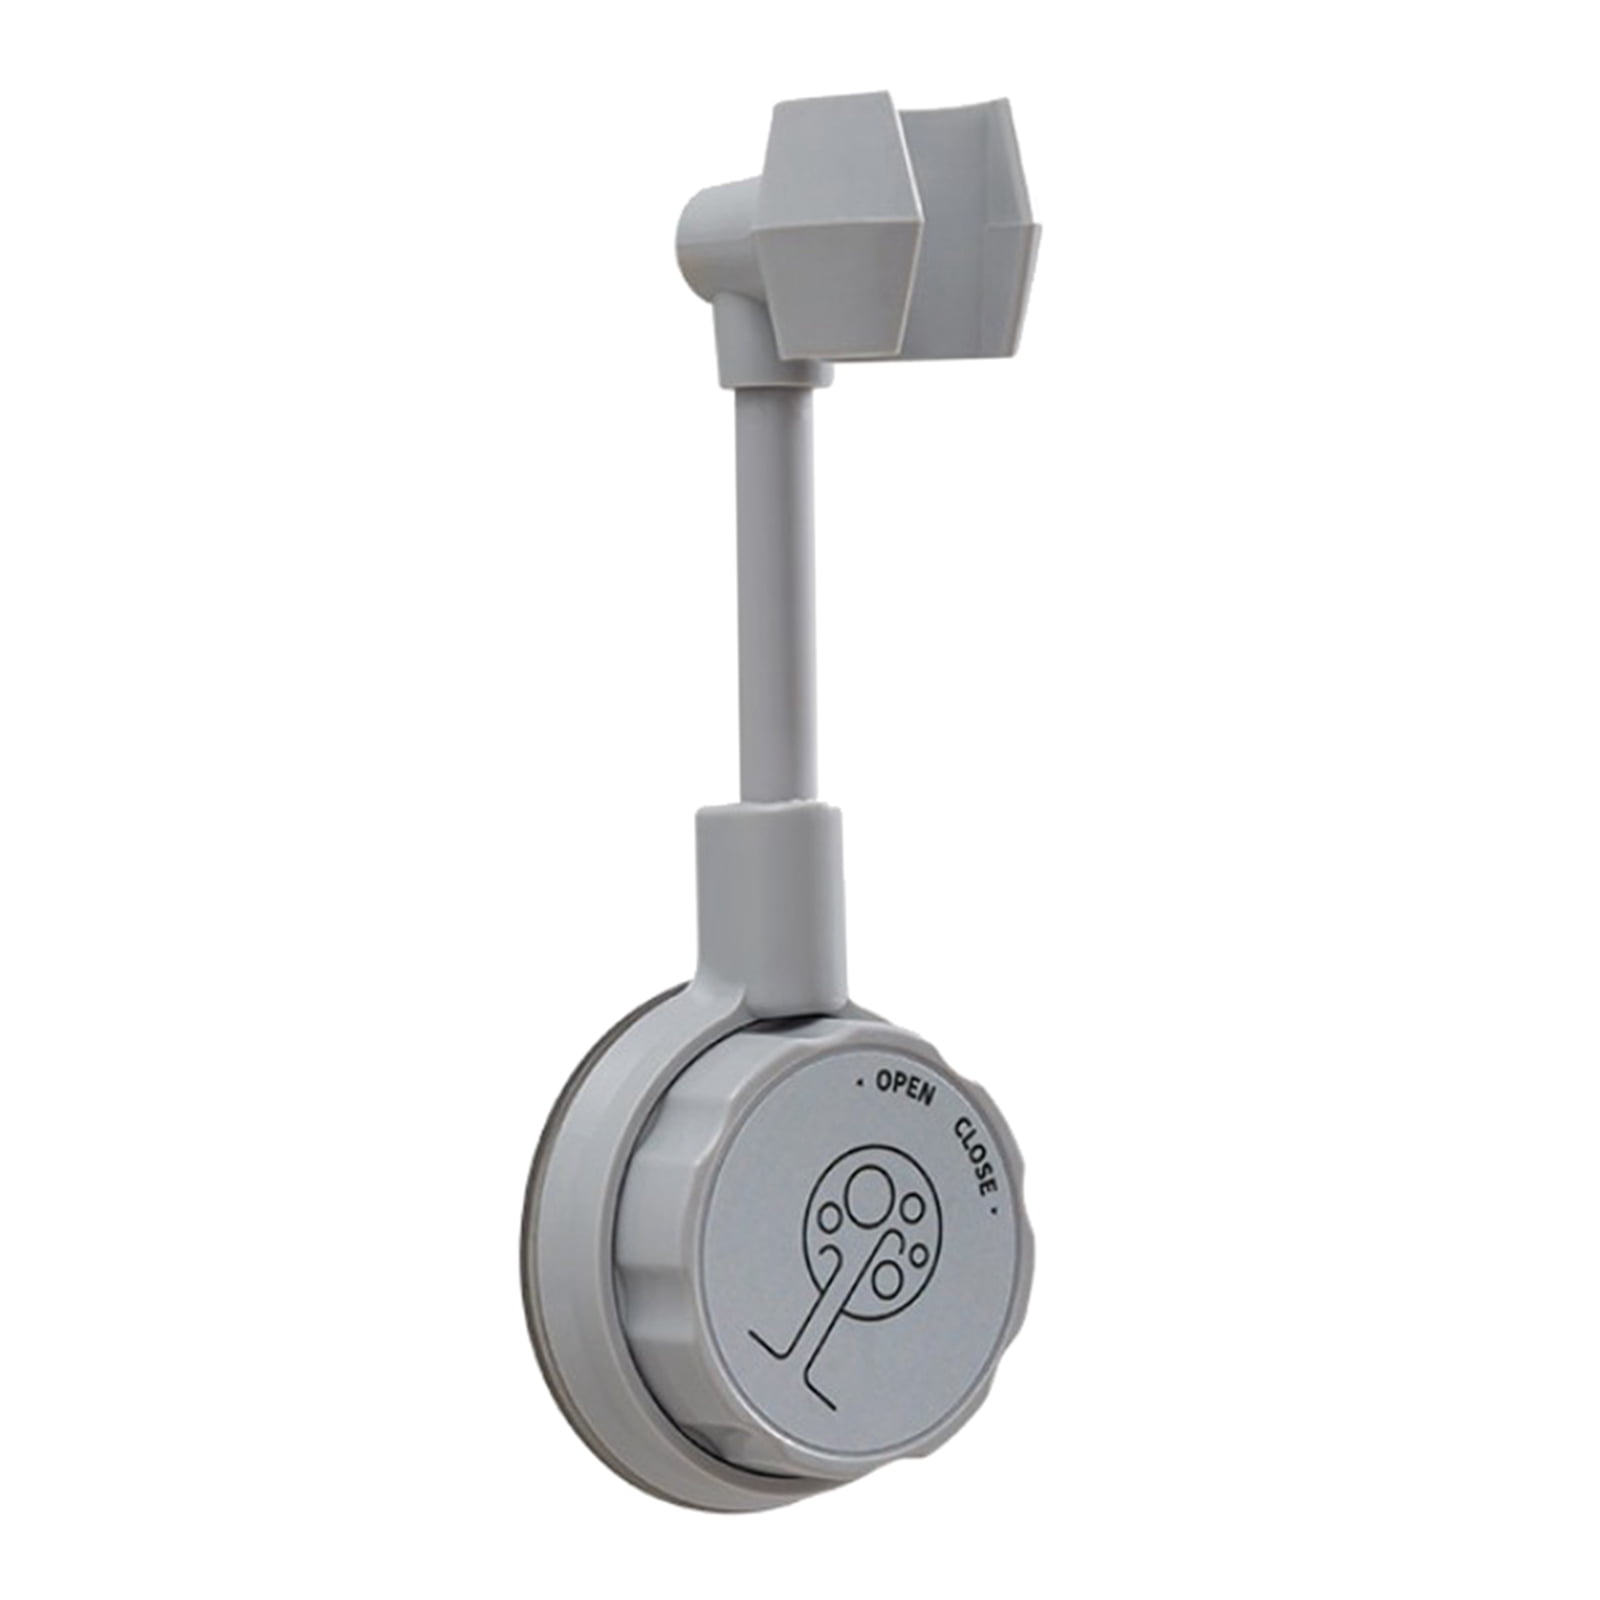 Details about   Universal Wall-Mounted Shower Head Holder Bracket Adjustable Holder Bathroom 1pc 